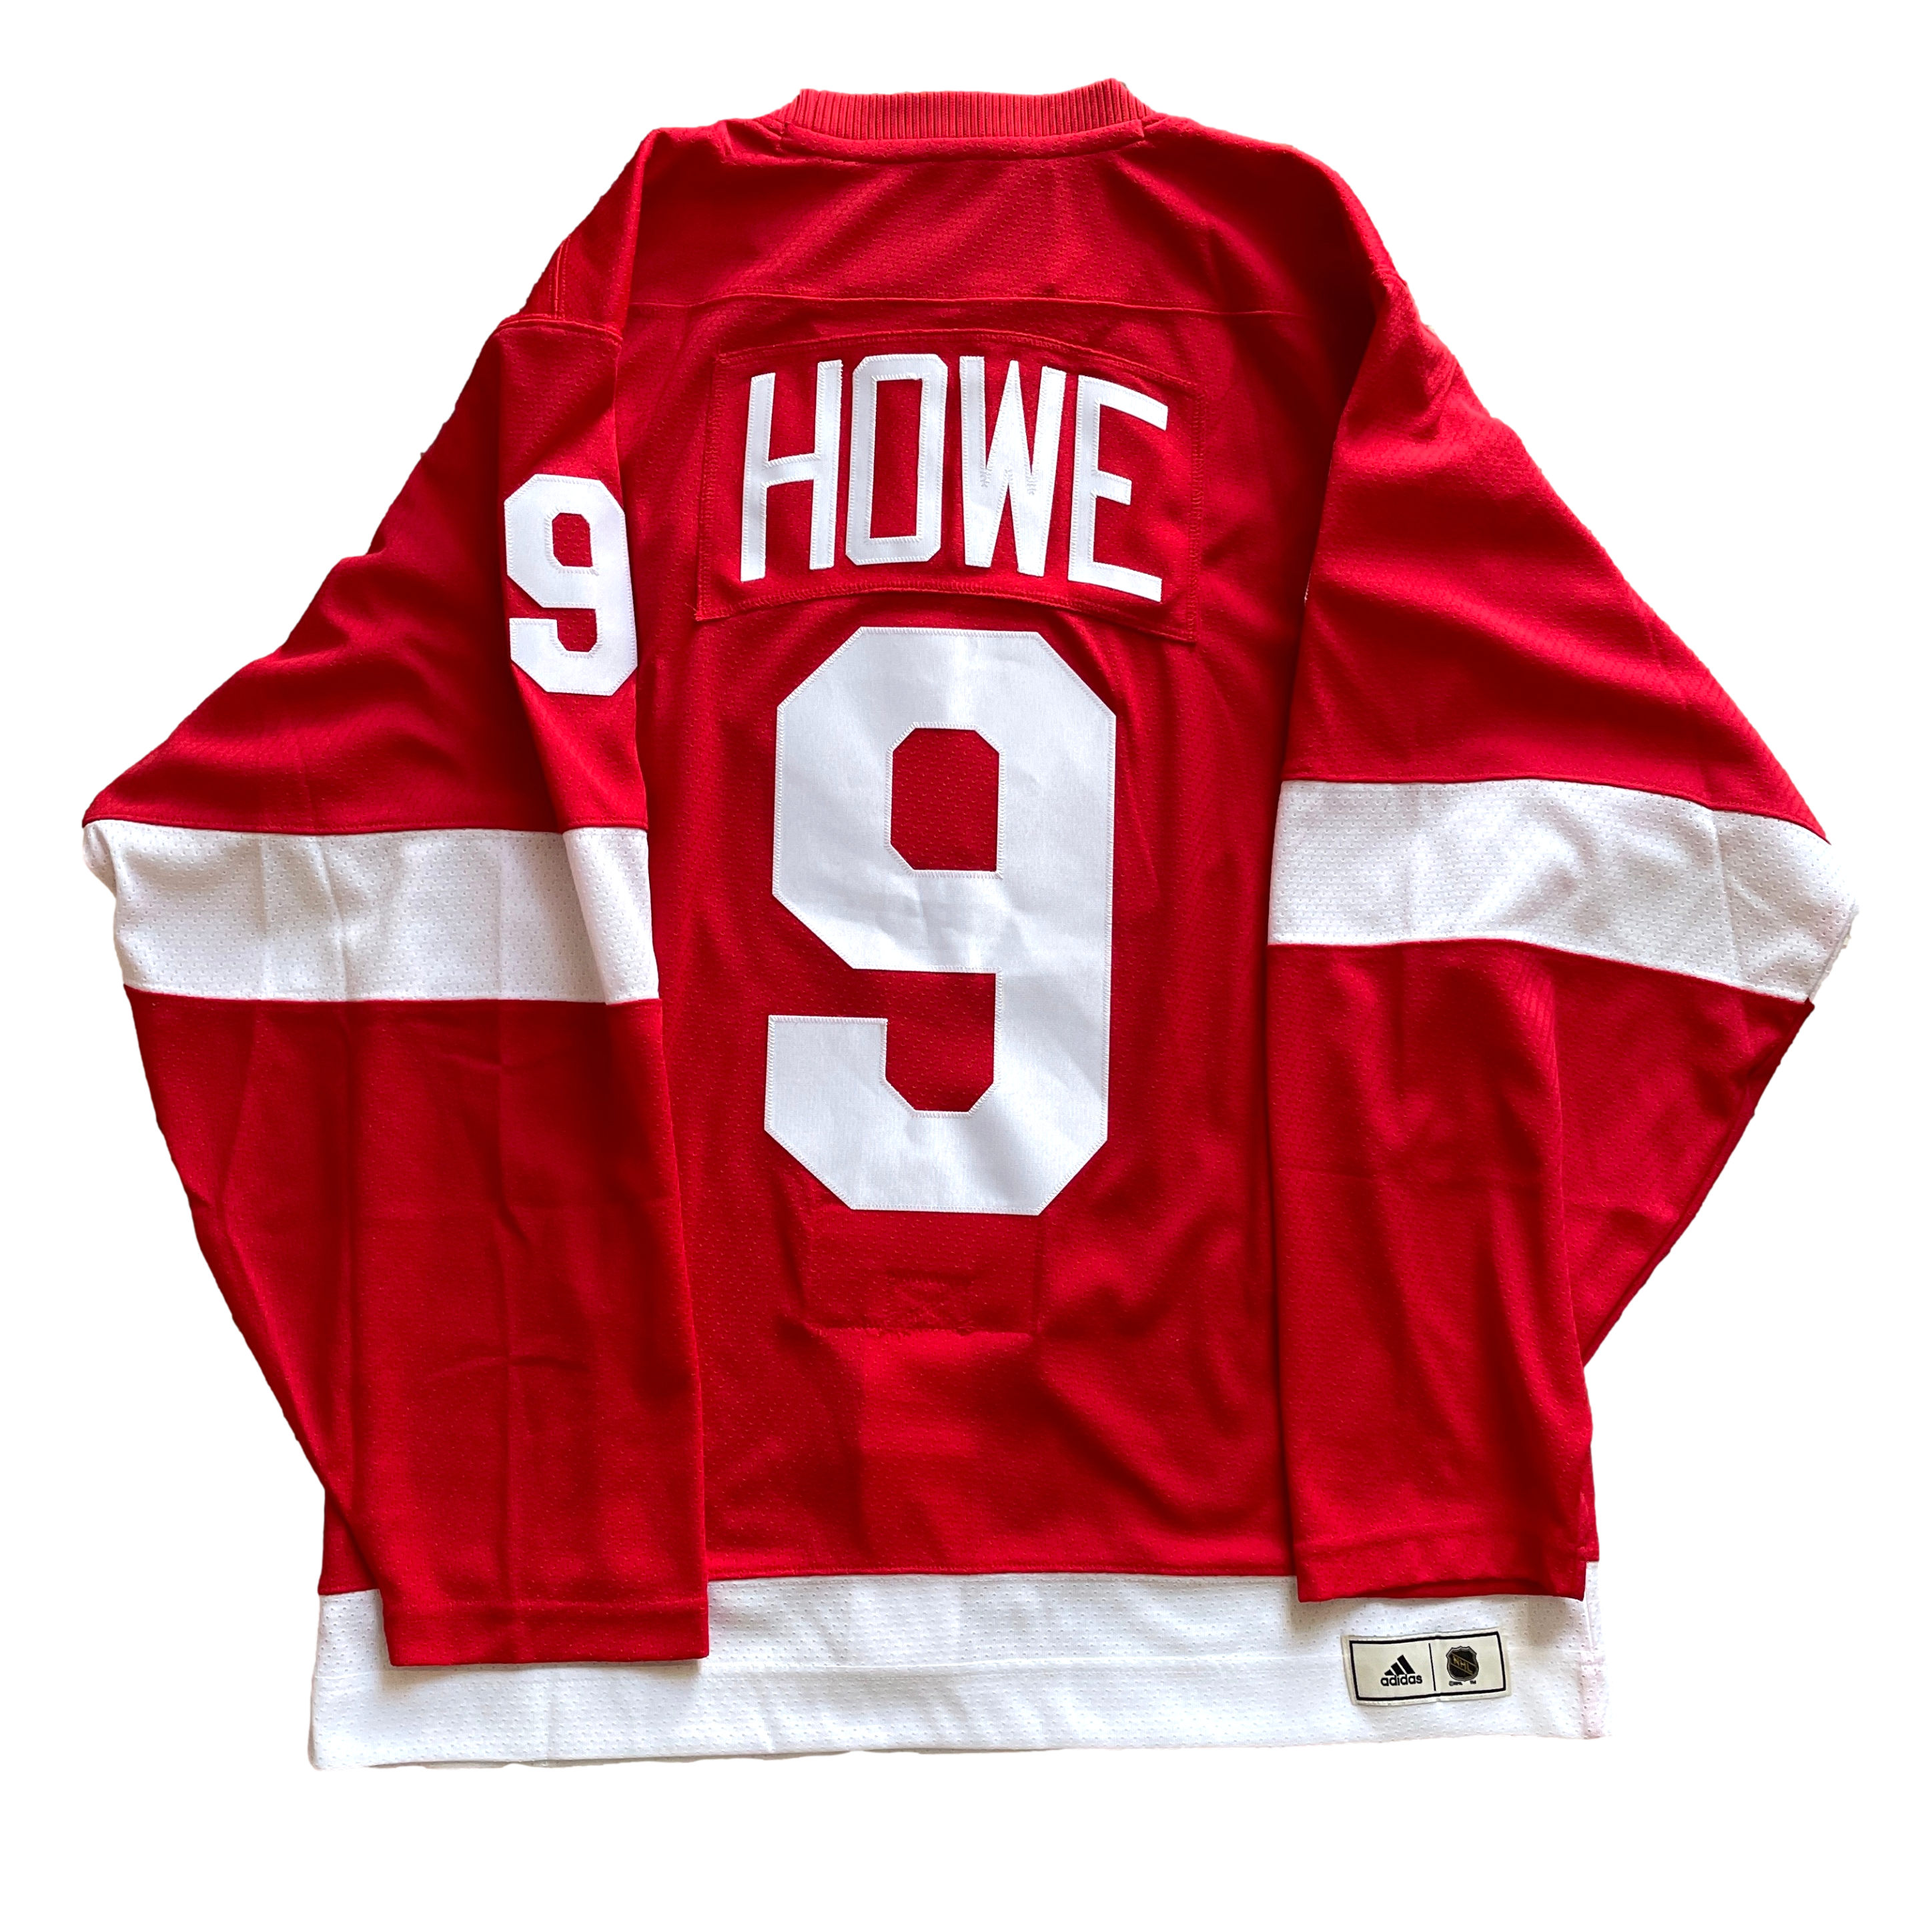 Detroit Red Wings NHL Hockey Jersey (46)